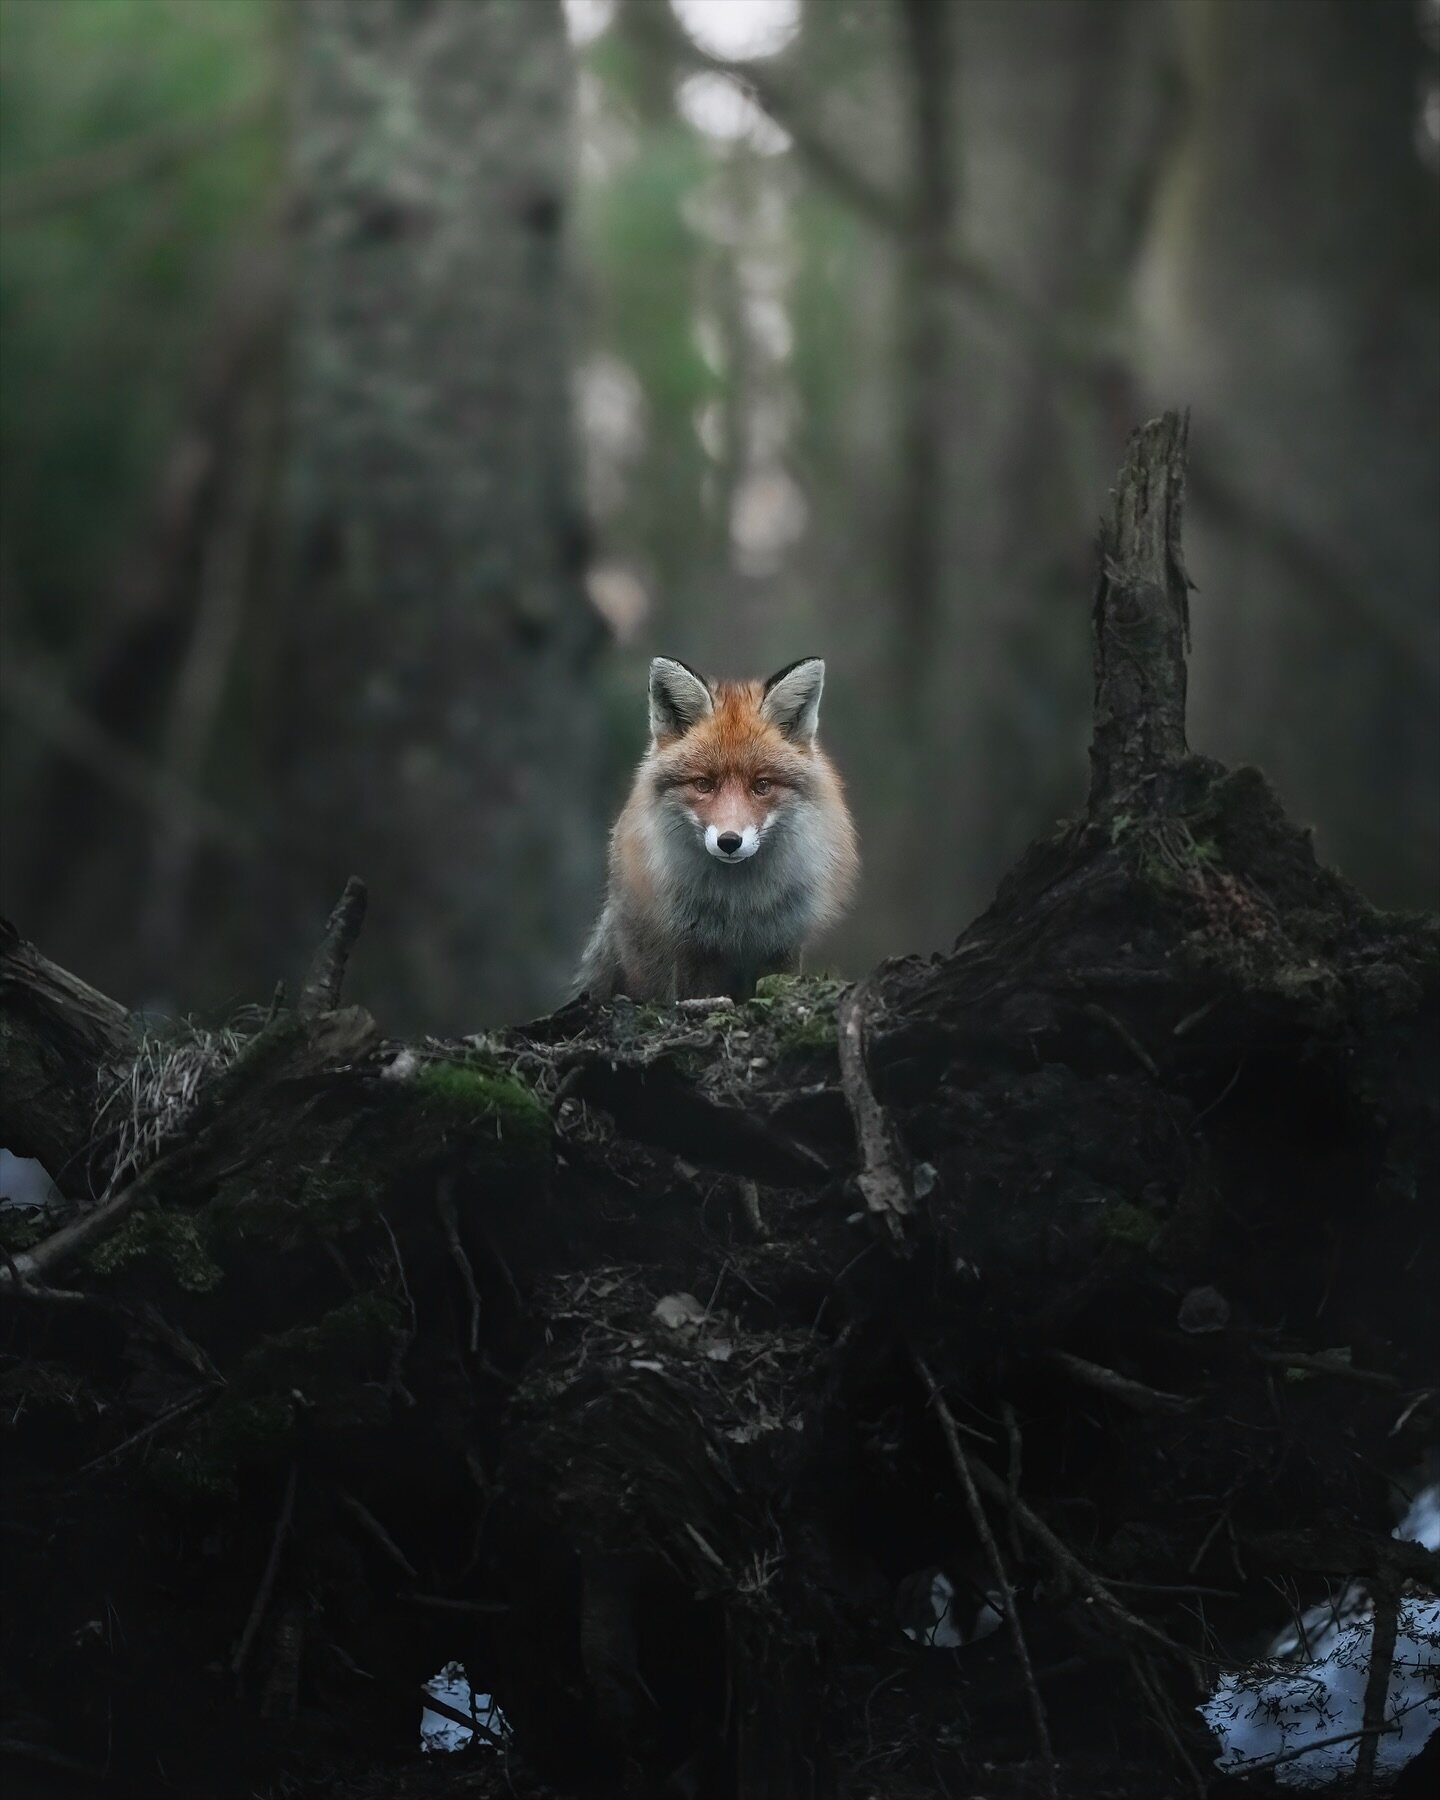 Fox in the old-growth forest 🦊🦊🦊

⁣
.⁣
.⁣
.⁣
.⁣
.⁣
#foxes #foxesofinstagram #wildlifephotography #wild #fox #renardroux #fuchs #foxesofig #wildlife_perfection #naturelover #wildlifeonearth #redfox #instafox #wildlifeplanet #vulpesvulpes #nature #w